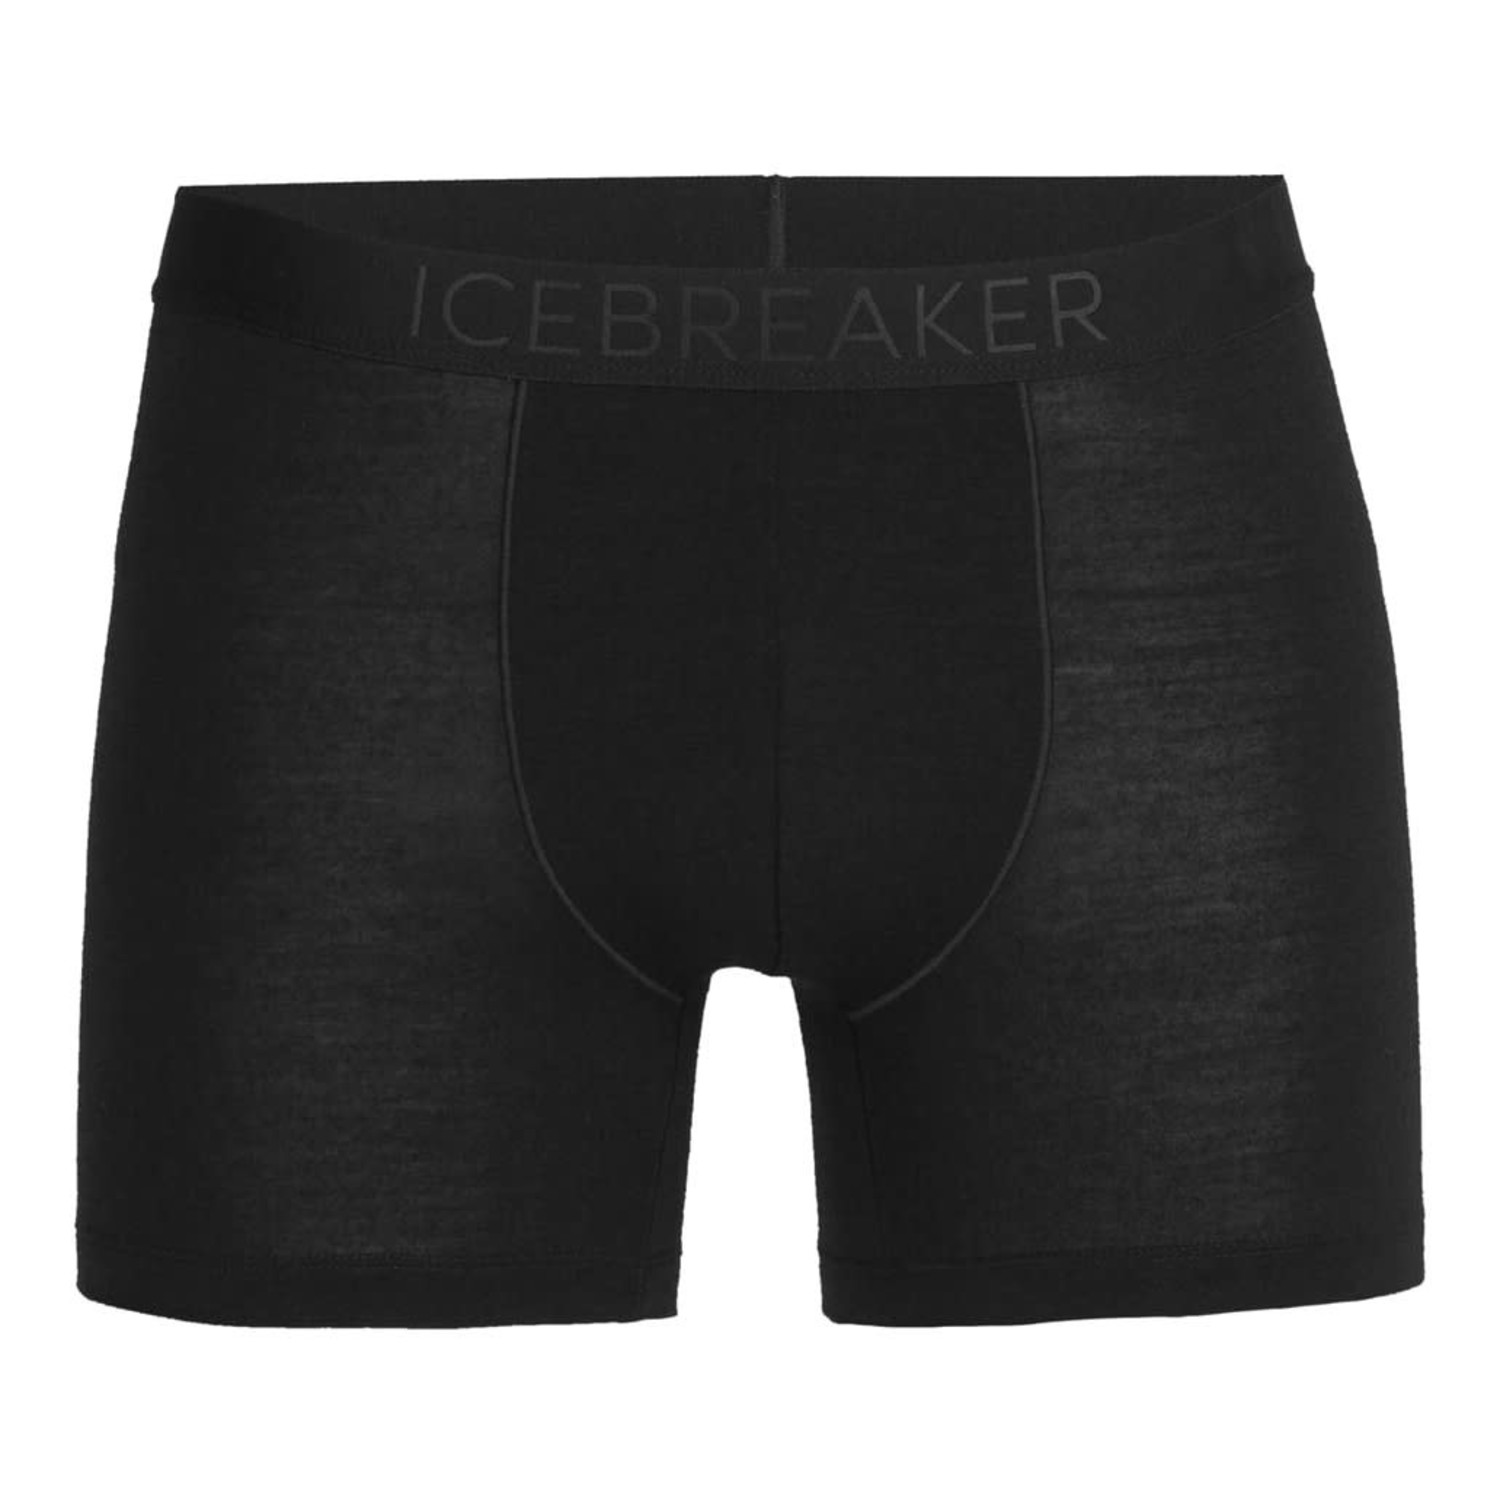 Icebreaker Men's Anatomica Cool-Lite Boxers - True Outdoors